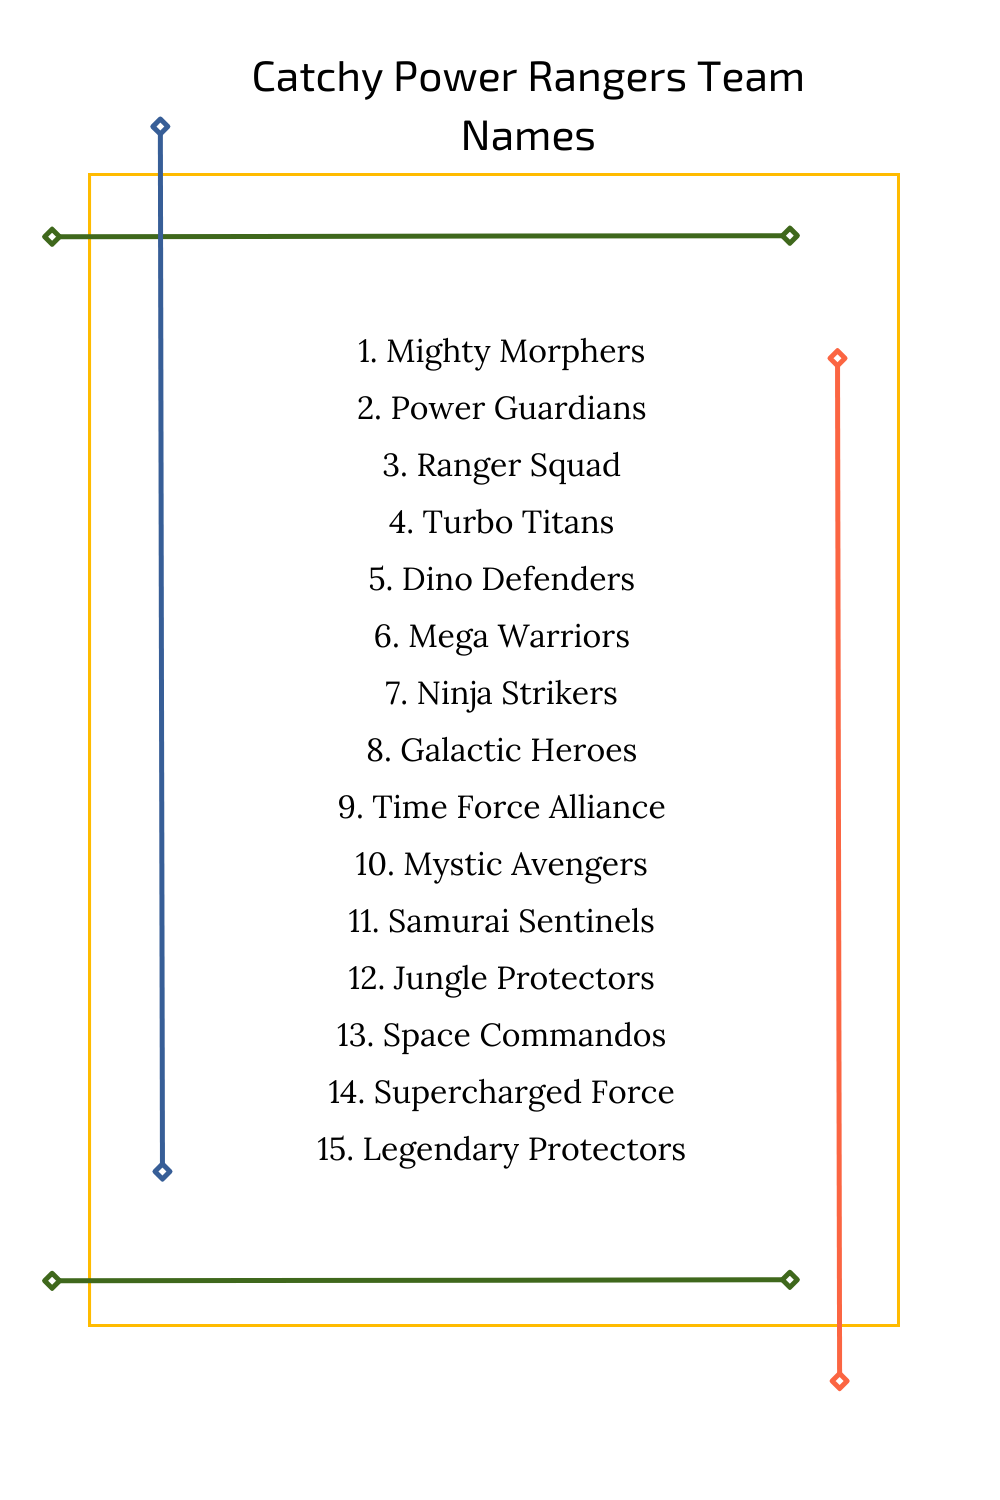 Catchy Power Rangers Team Names